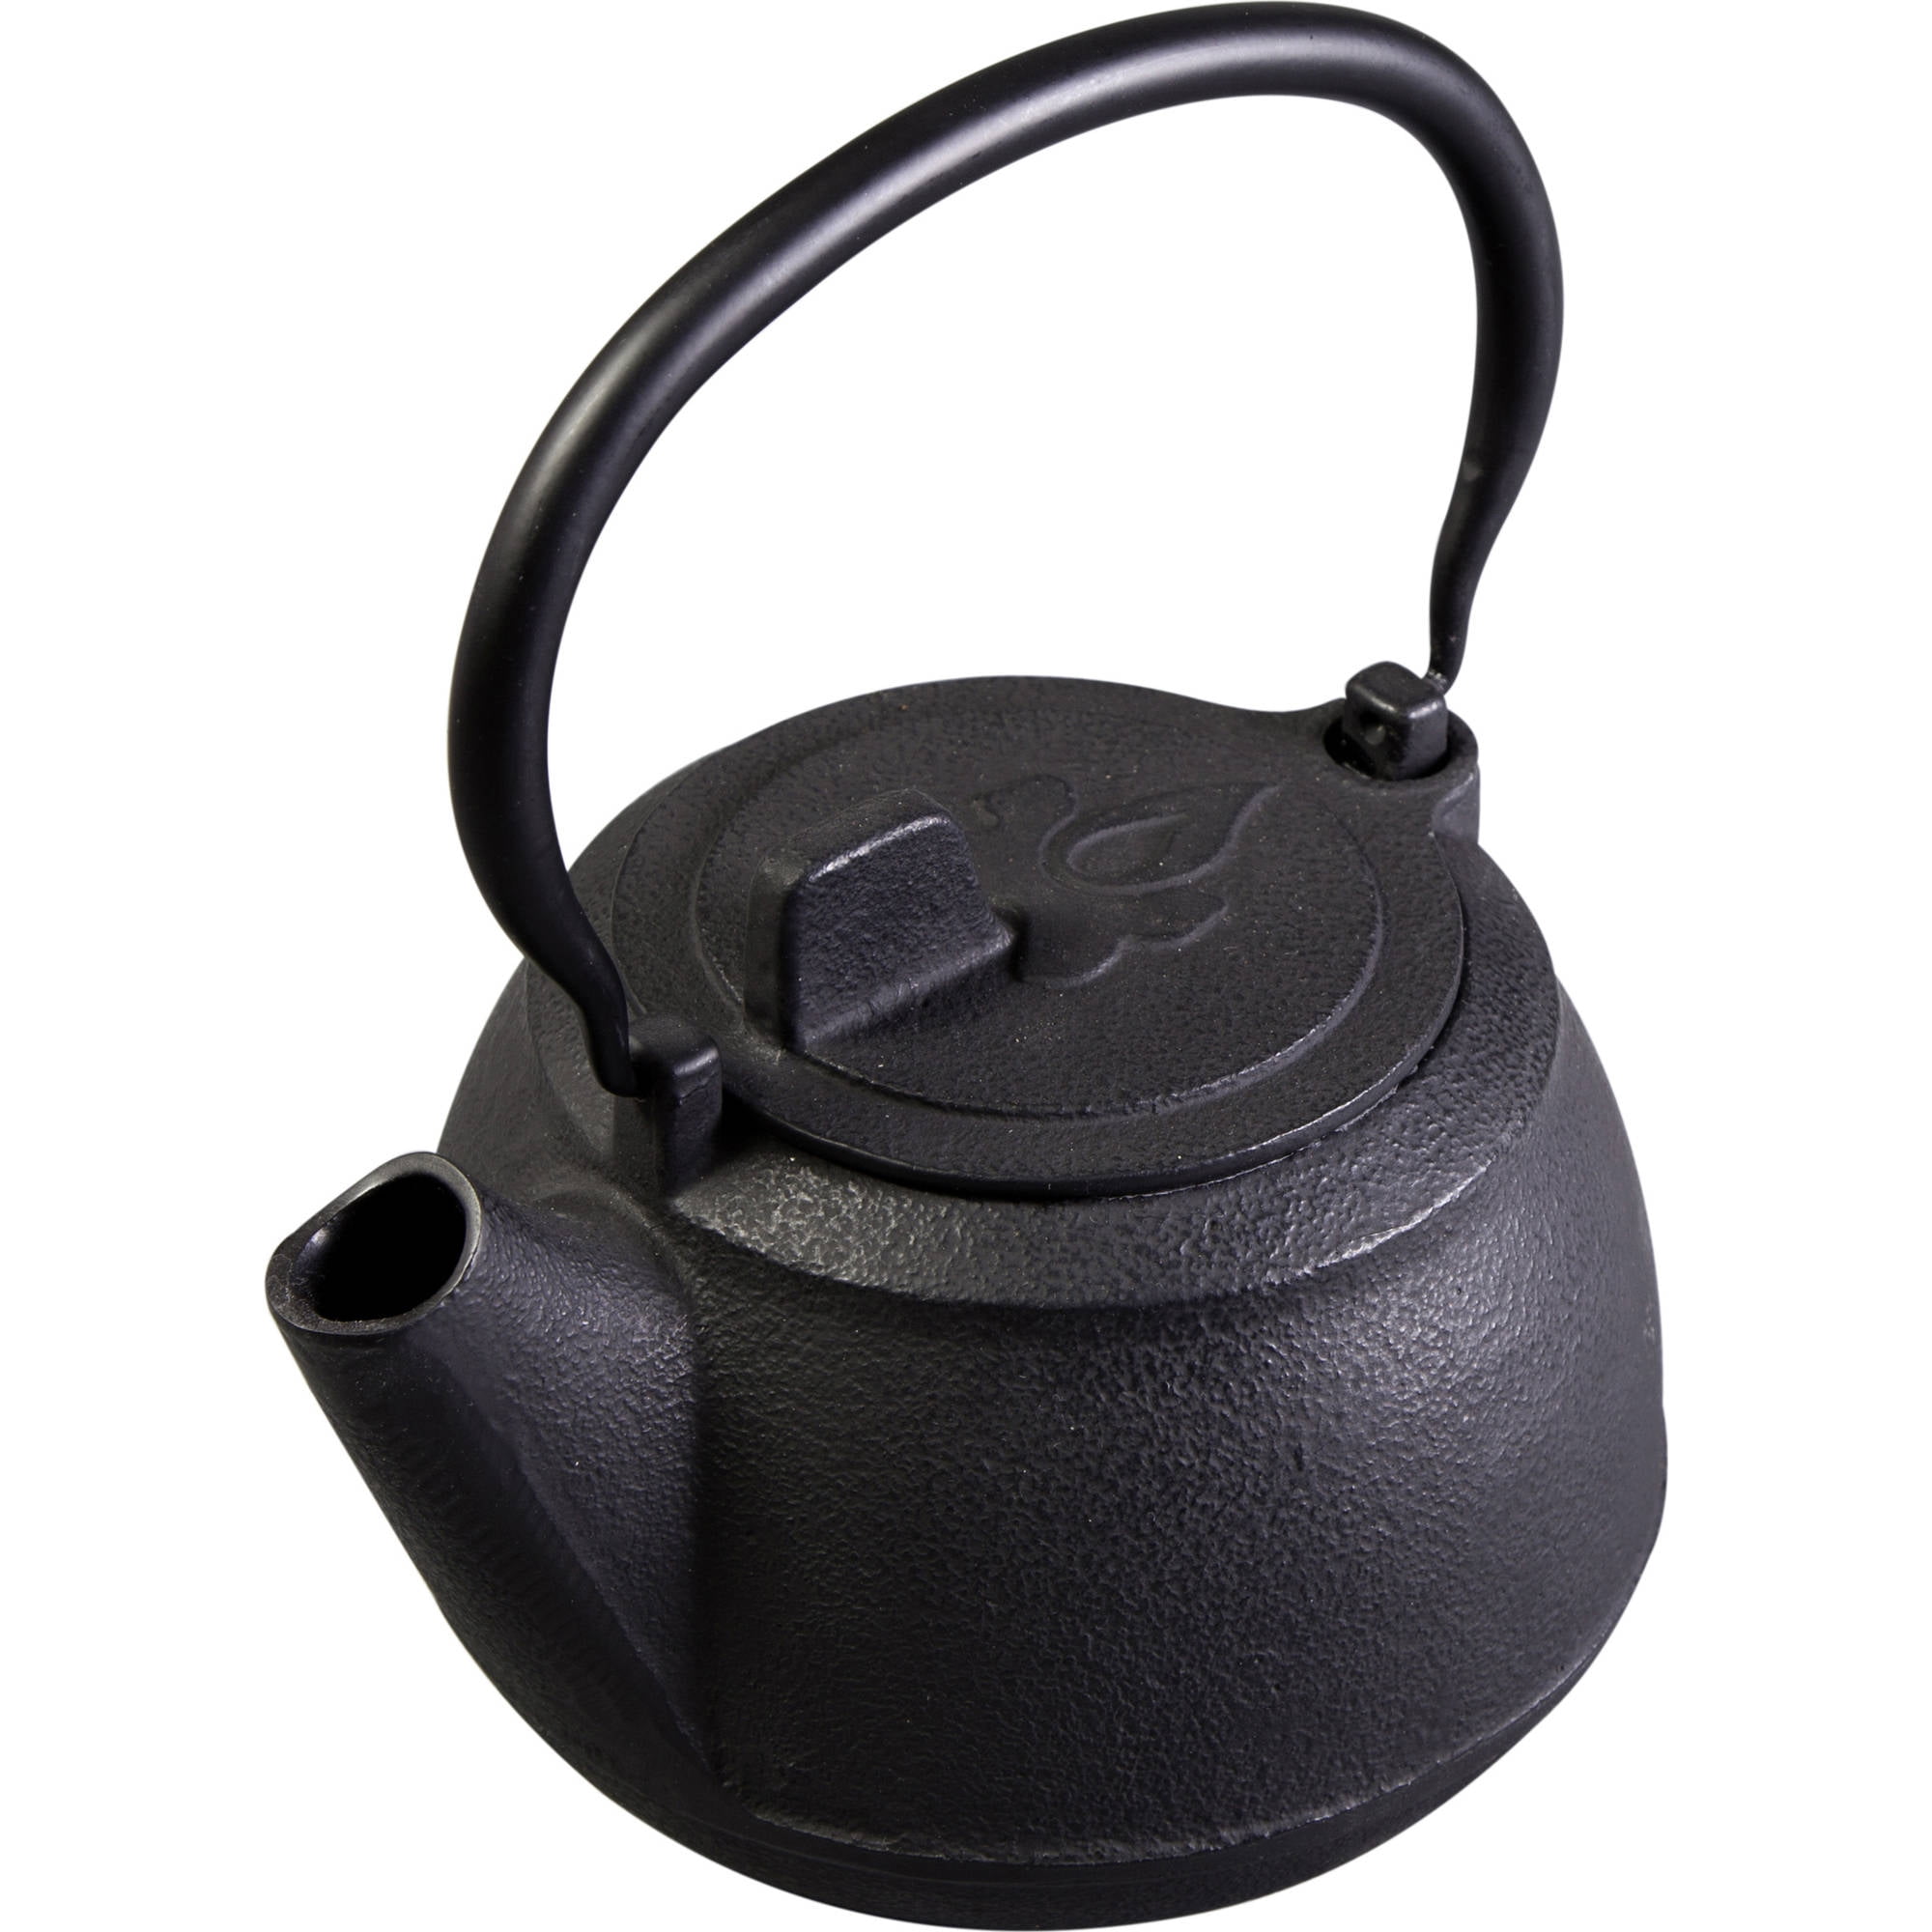 ExcelSteel 423t 0.8 L Asian Cast Iron Teapot Teal 